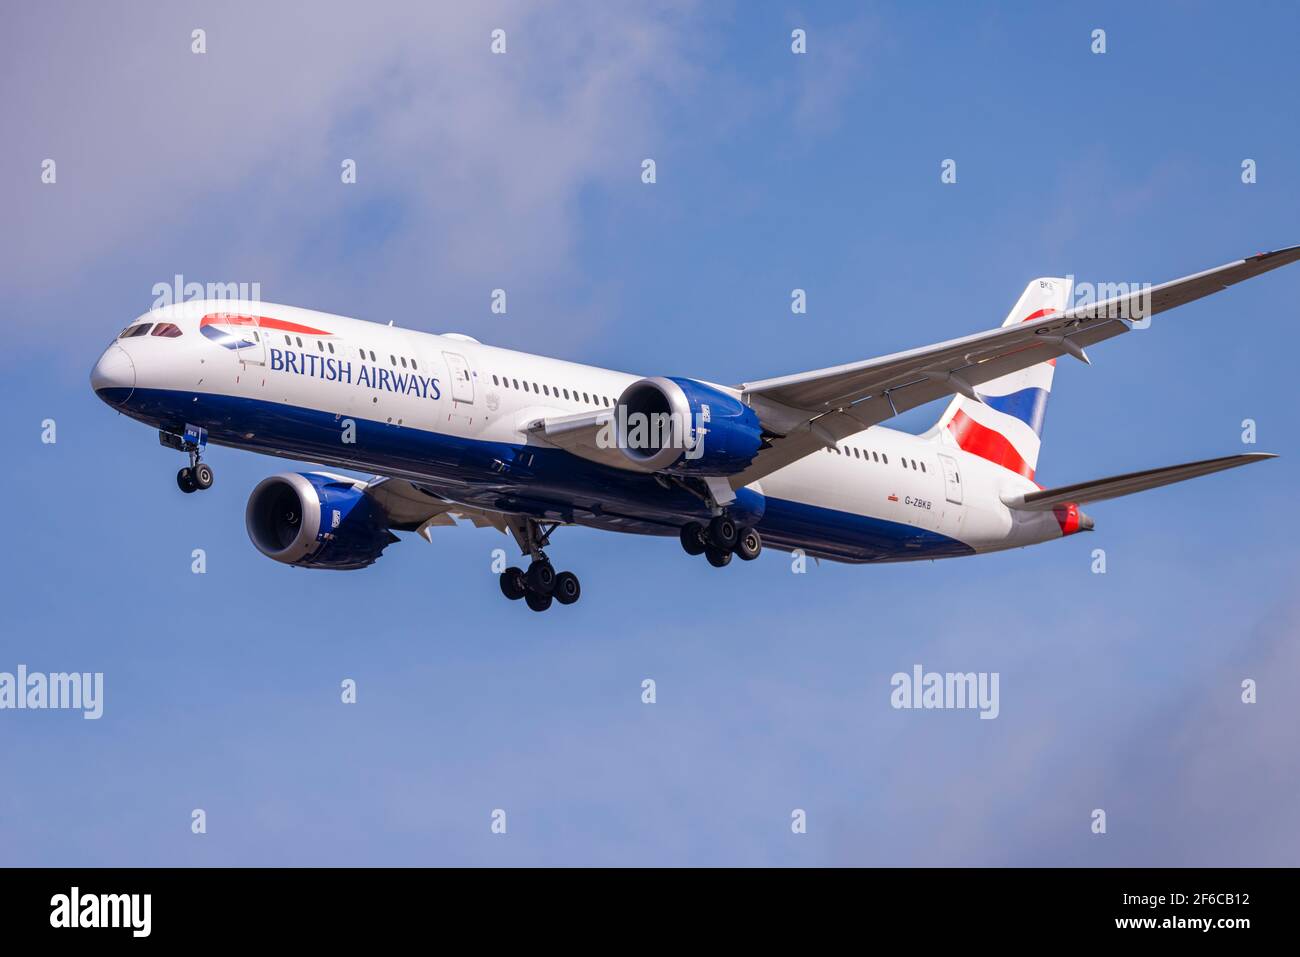 British Airways Boeing 787 Dreamliner jet airliner plane G-ZBKB on finals to land at London Heathrow Airport, UK. BA airplane approach to landing Stock Photo